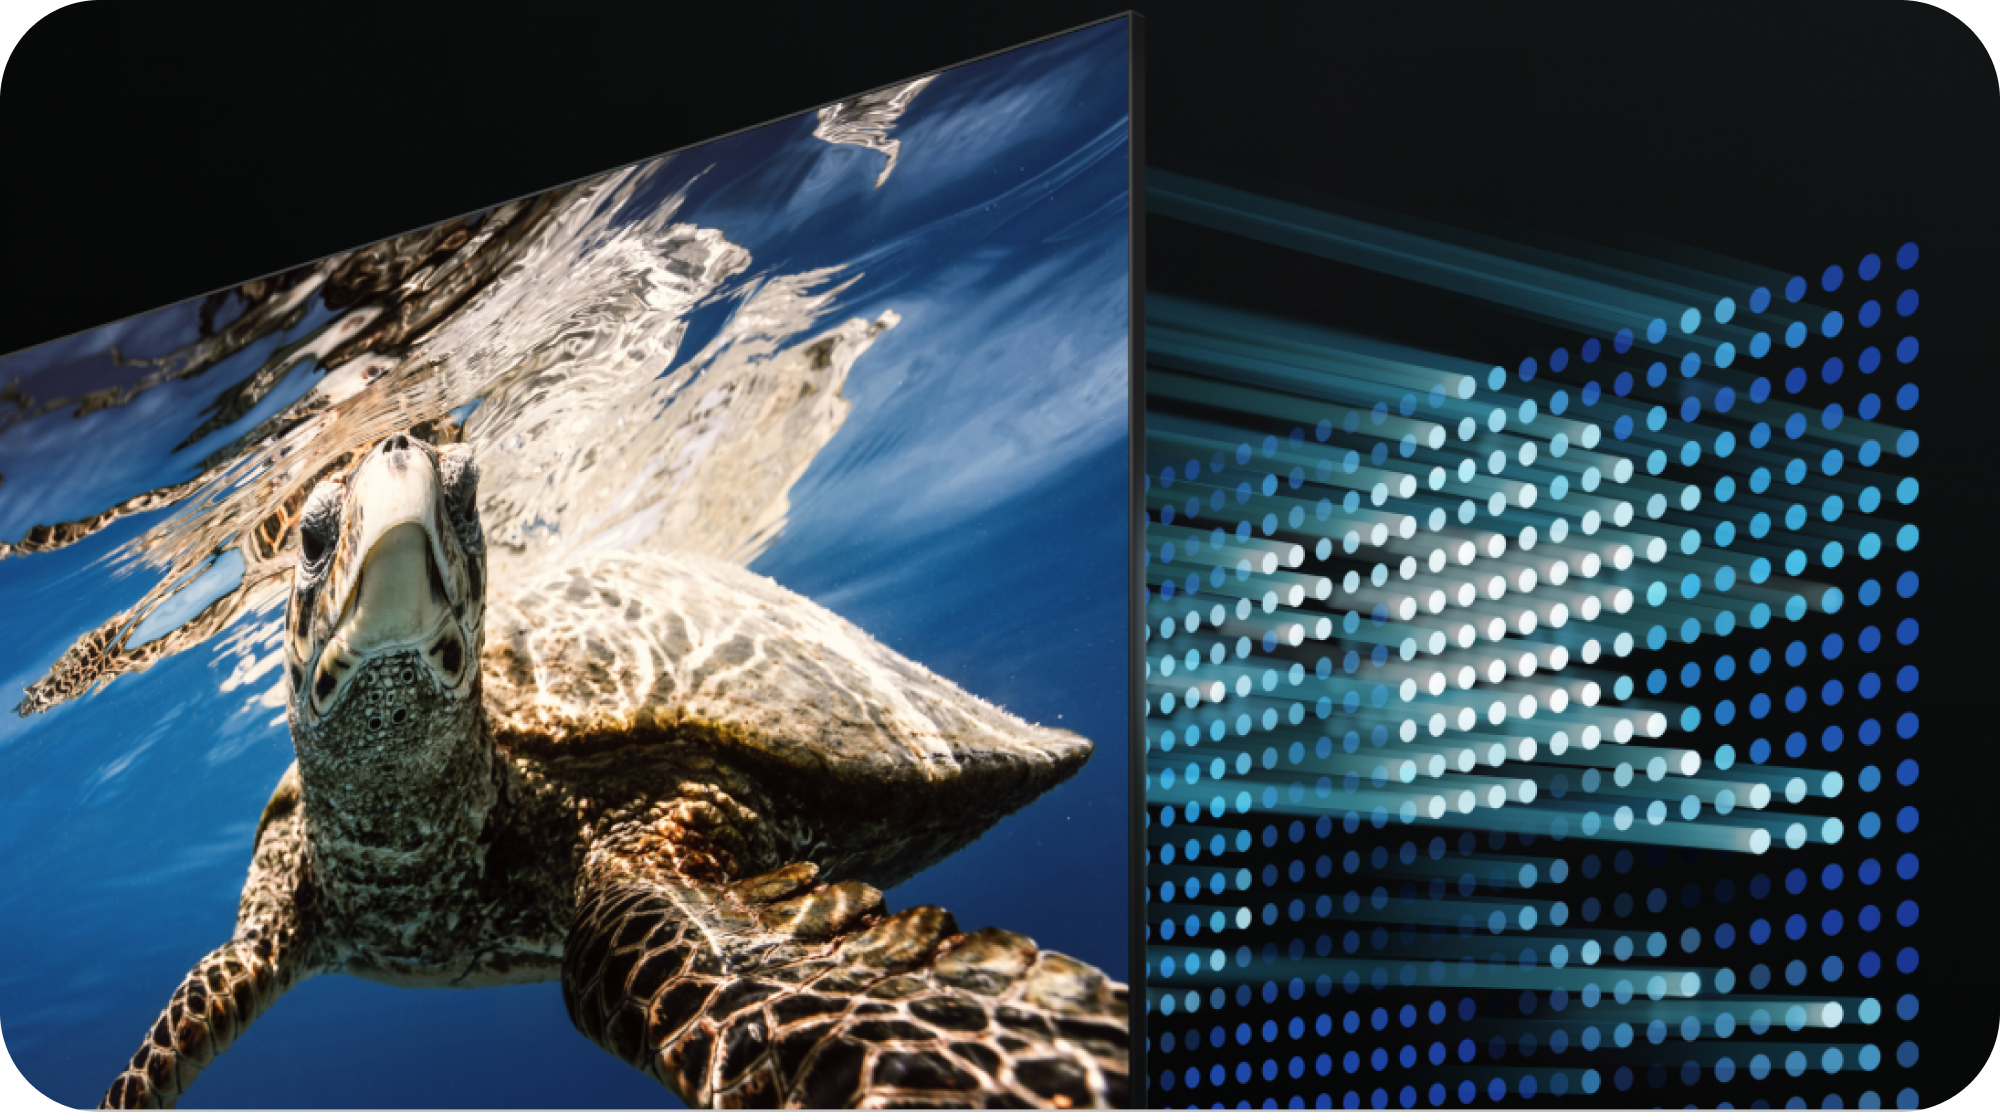 Samsung TV - Direct Full Array og en havskildpadde, der svømmer i havet